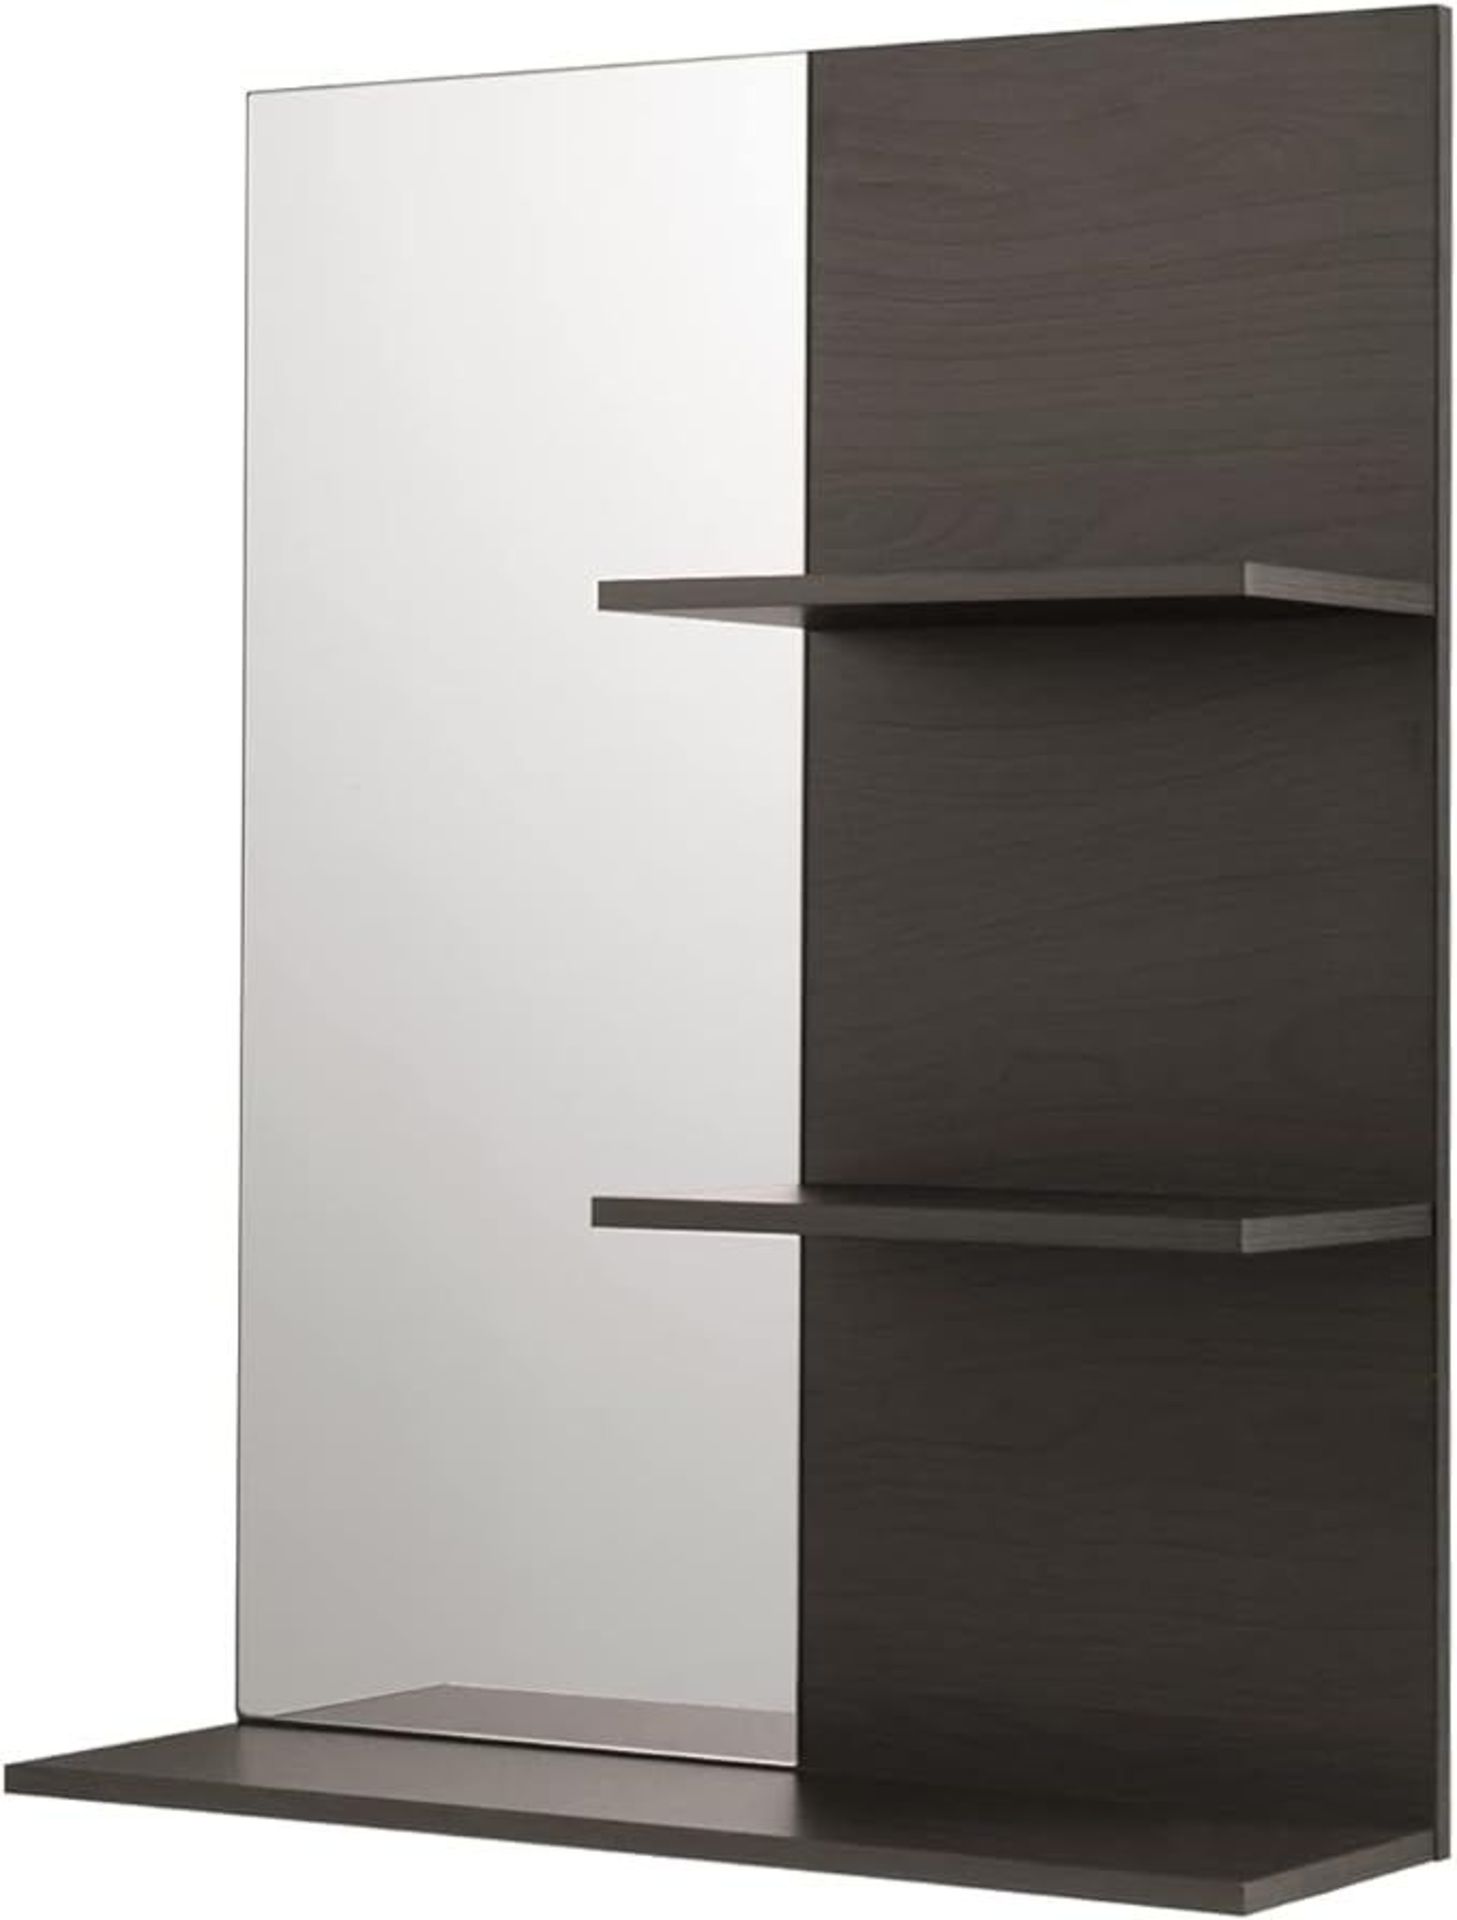 Multigot Bathroom Mirror, Wall-Mounted Vanity Mirrors with 3-Tier Open Shelf, Wall Organizer Unit